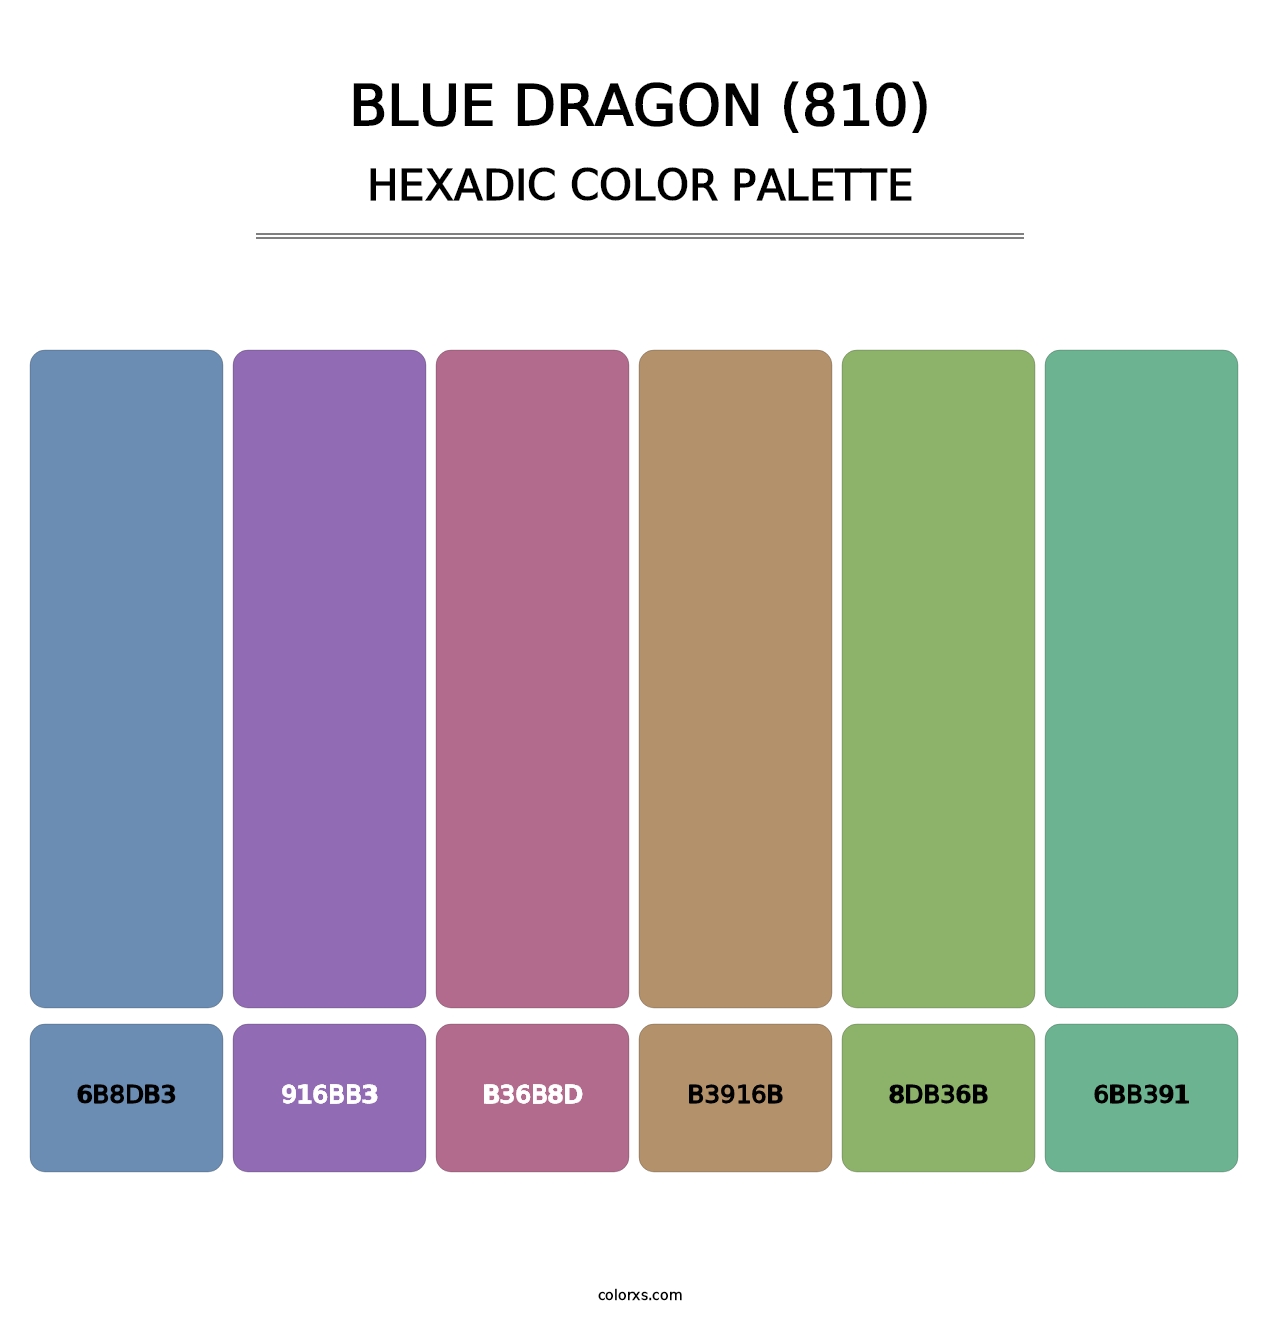 Blue Dragon (810) - Hexadic Color Palette